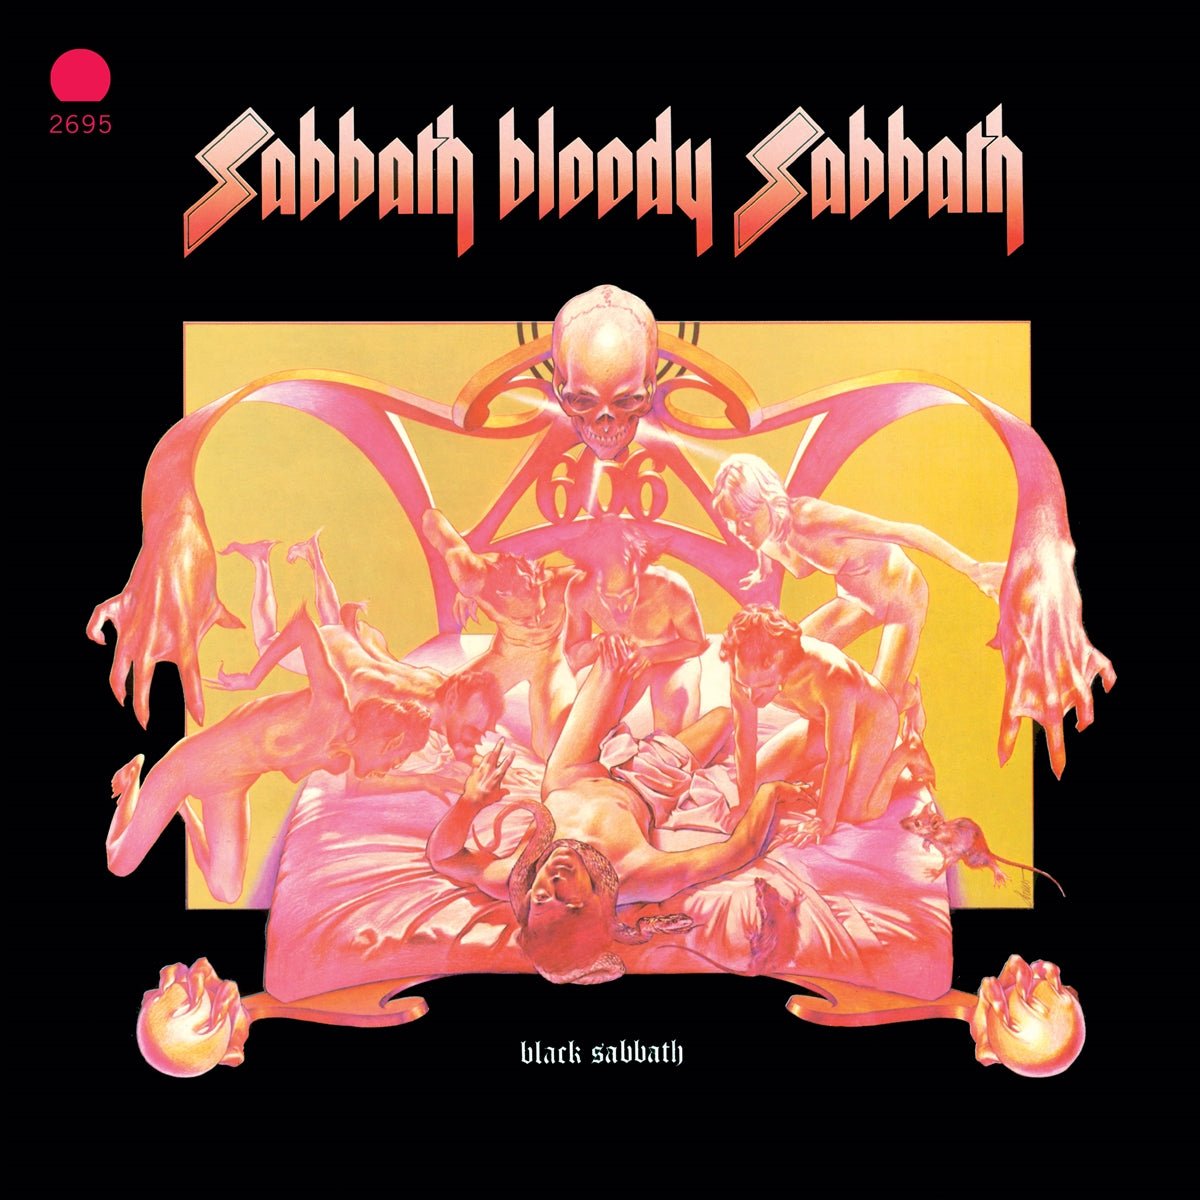 Classic Albums Covered - Black Sabbath - XRaydio